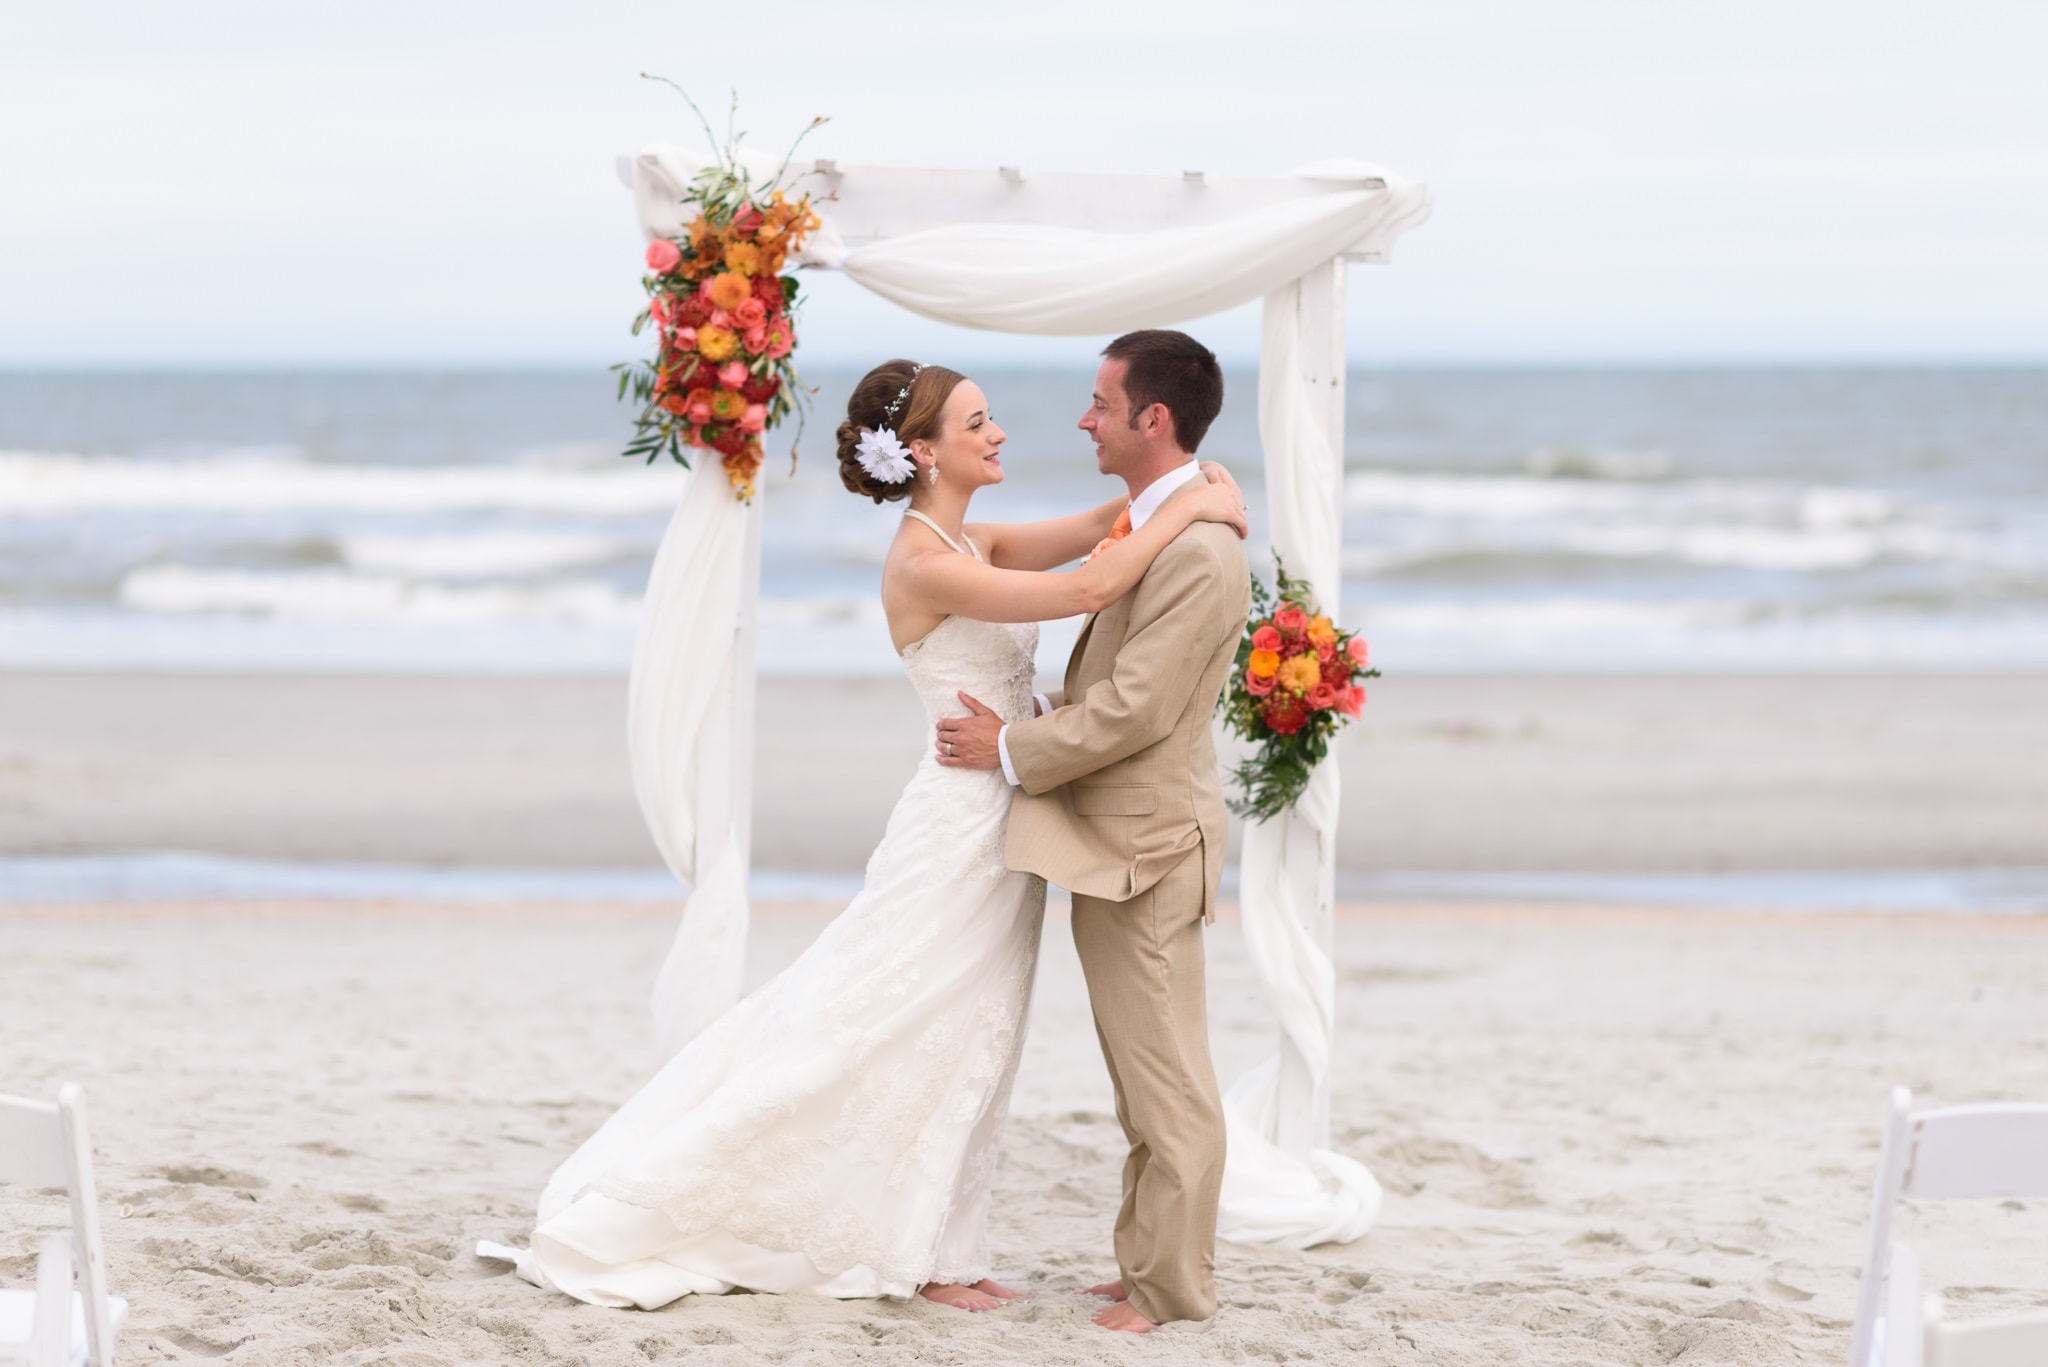 Happy couple in front of beach wedding arbor - Hilton at Kingston Plantation